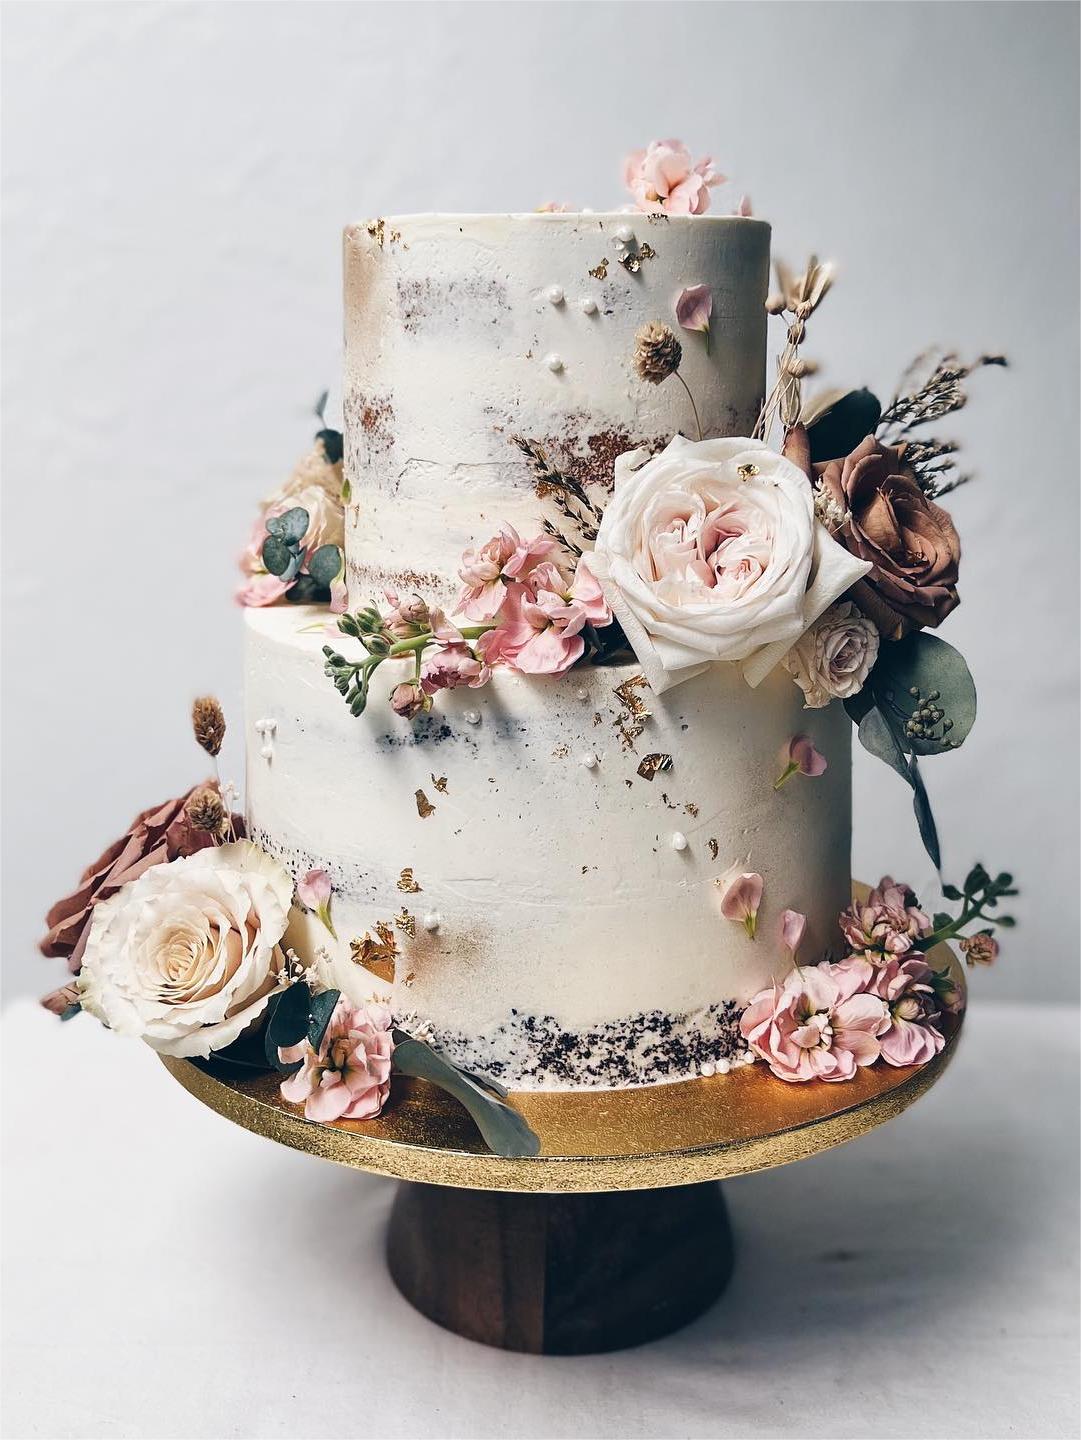 Is Buttercream Or Fondant Better For A Wedding Cake? - Belmar Bakery